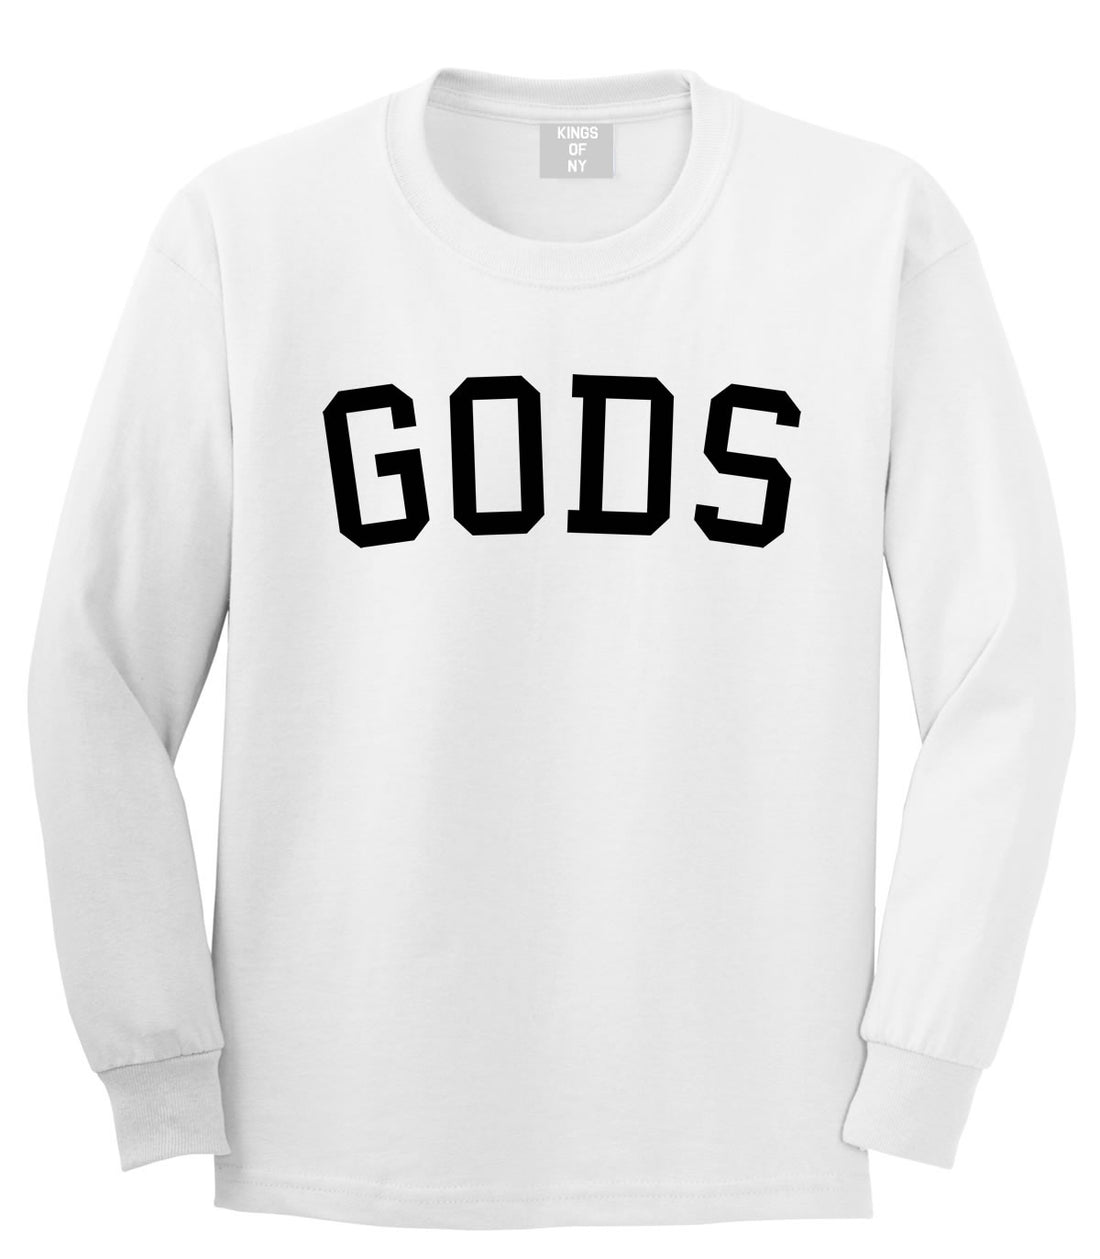 Kings Of NY Gods Long Sleeve T-Shirt in White